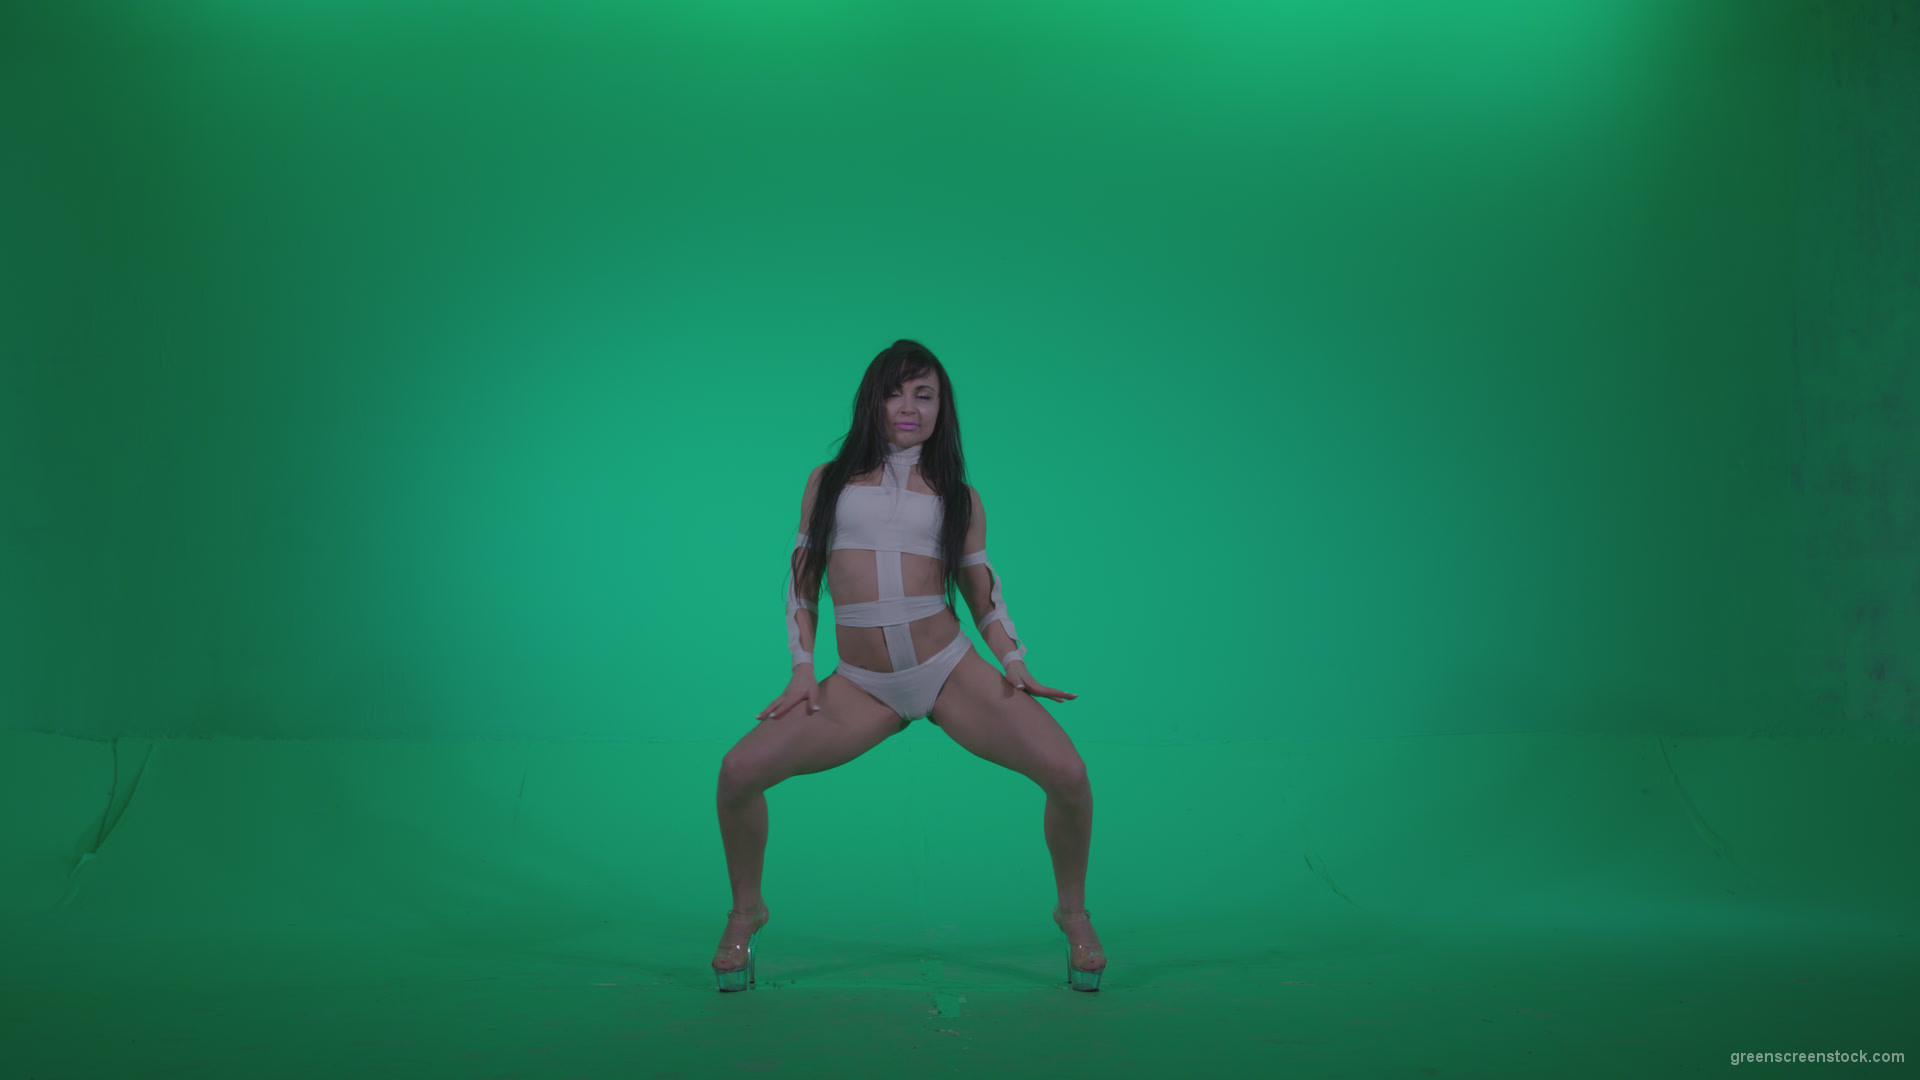 Go-go-Dancer-LiLu-e4-Green-Screen-Video-Footage_004 Green Screen Stock